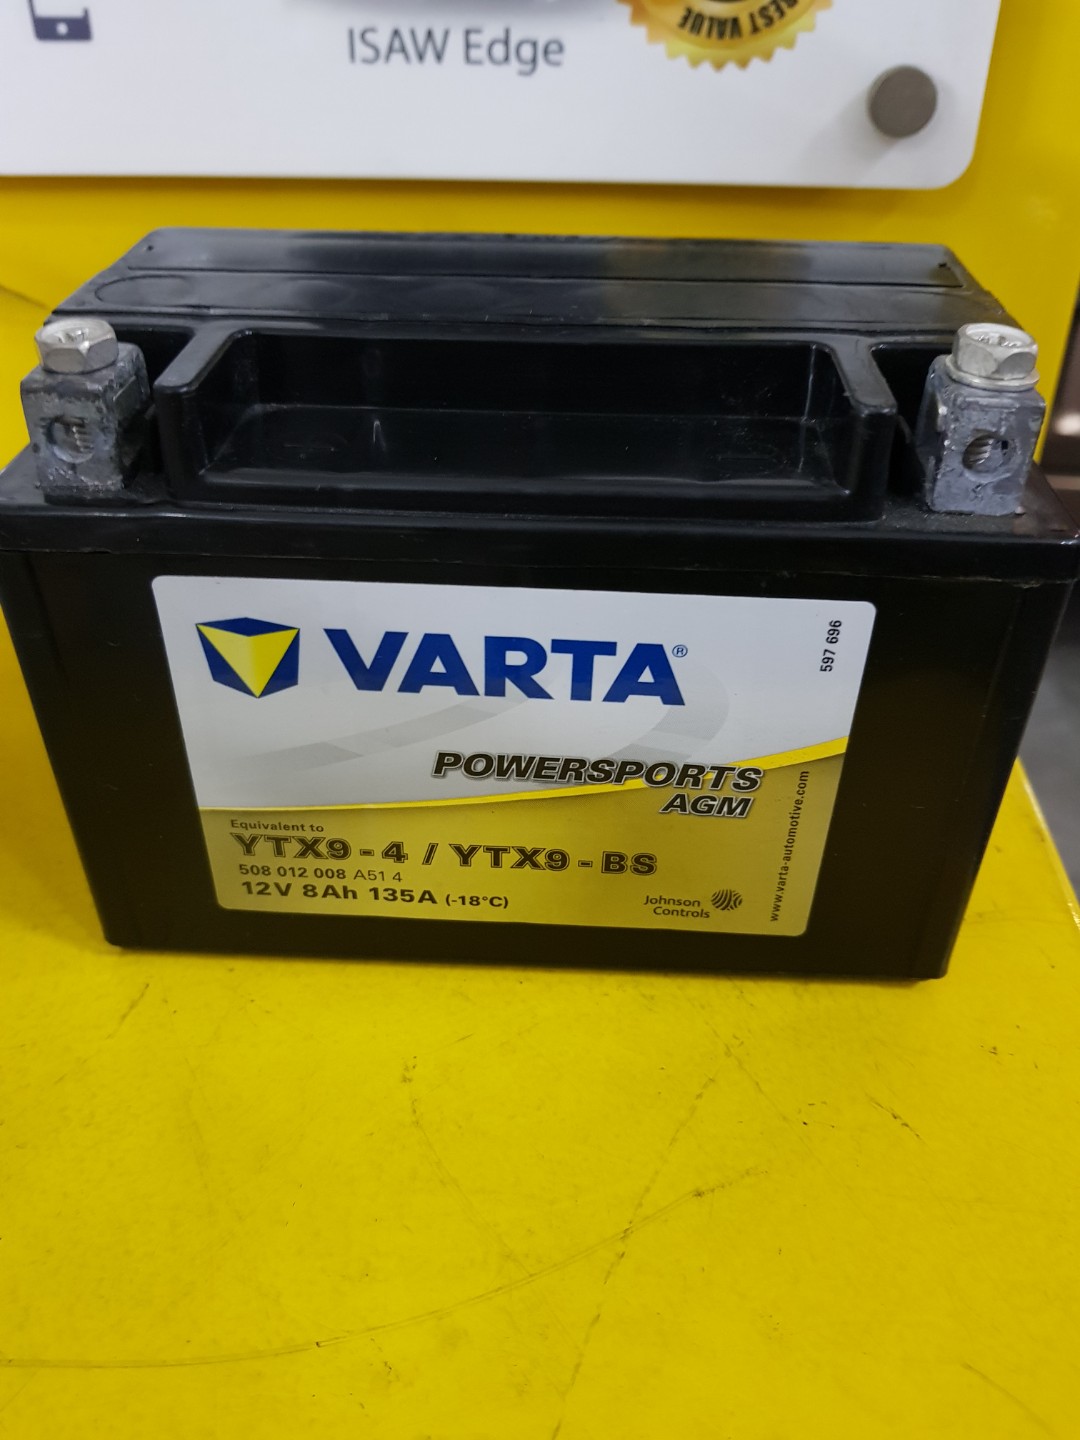 Varta AGM powersports superbike battery